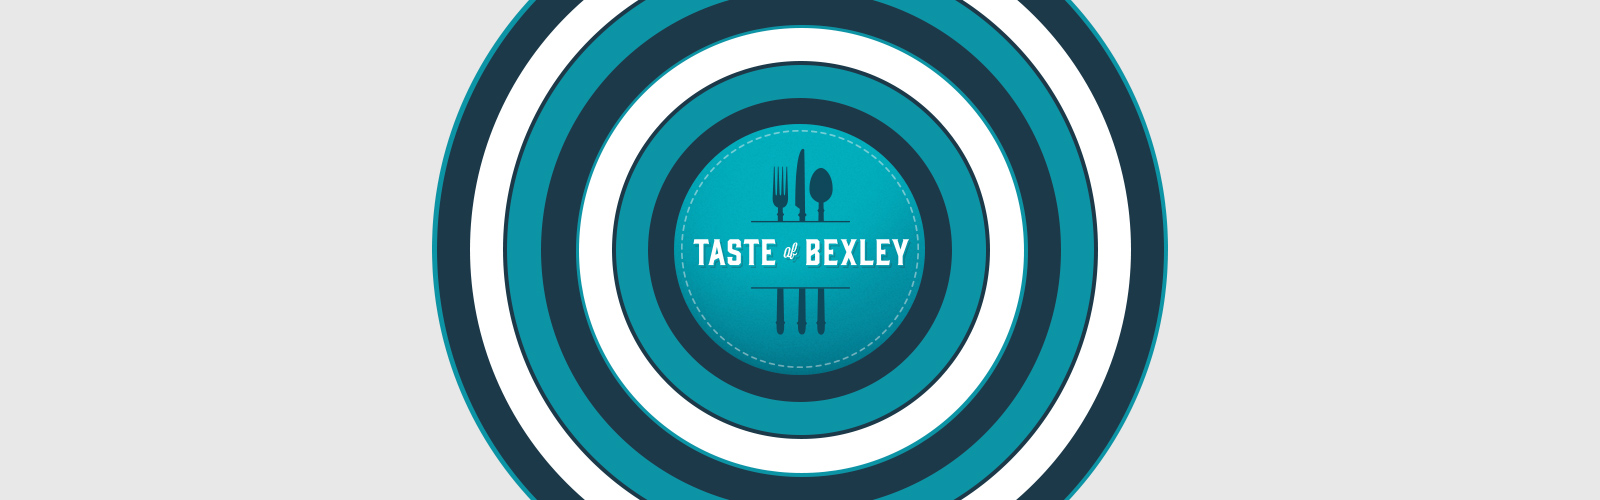 Taste of Bexley Banner